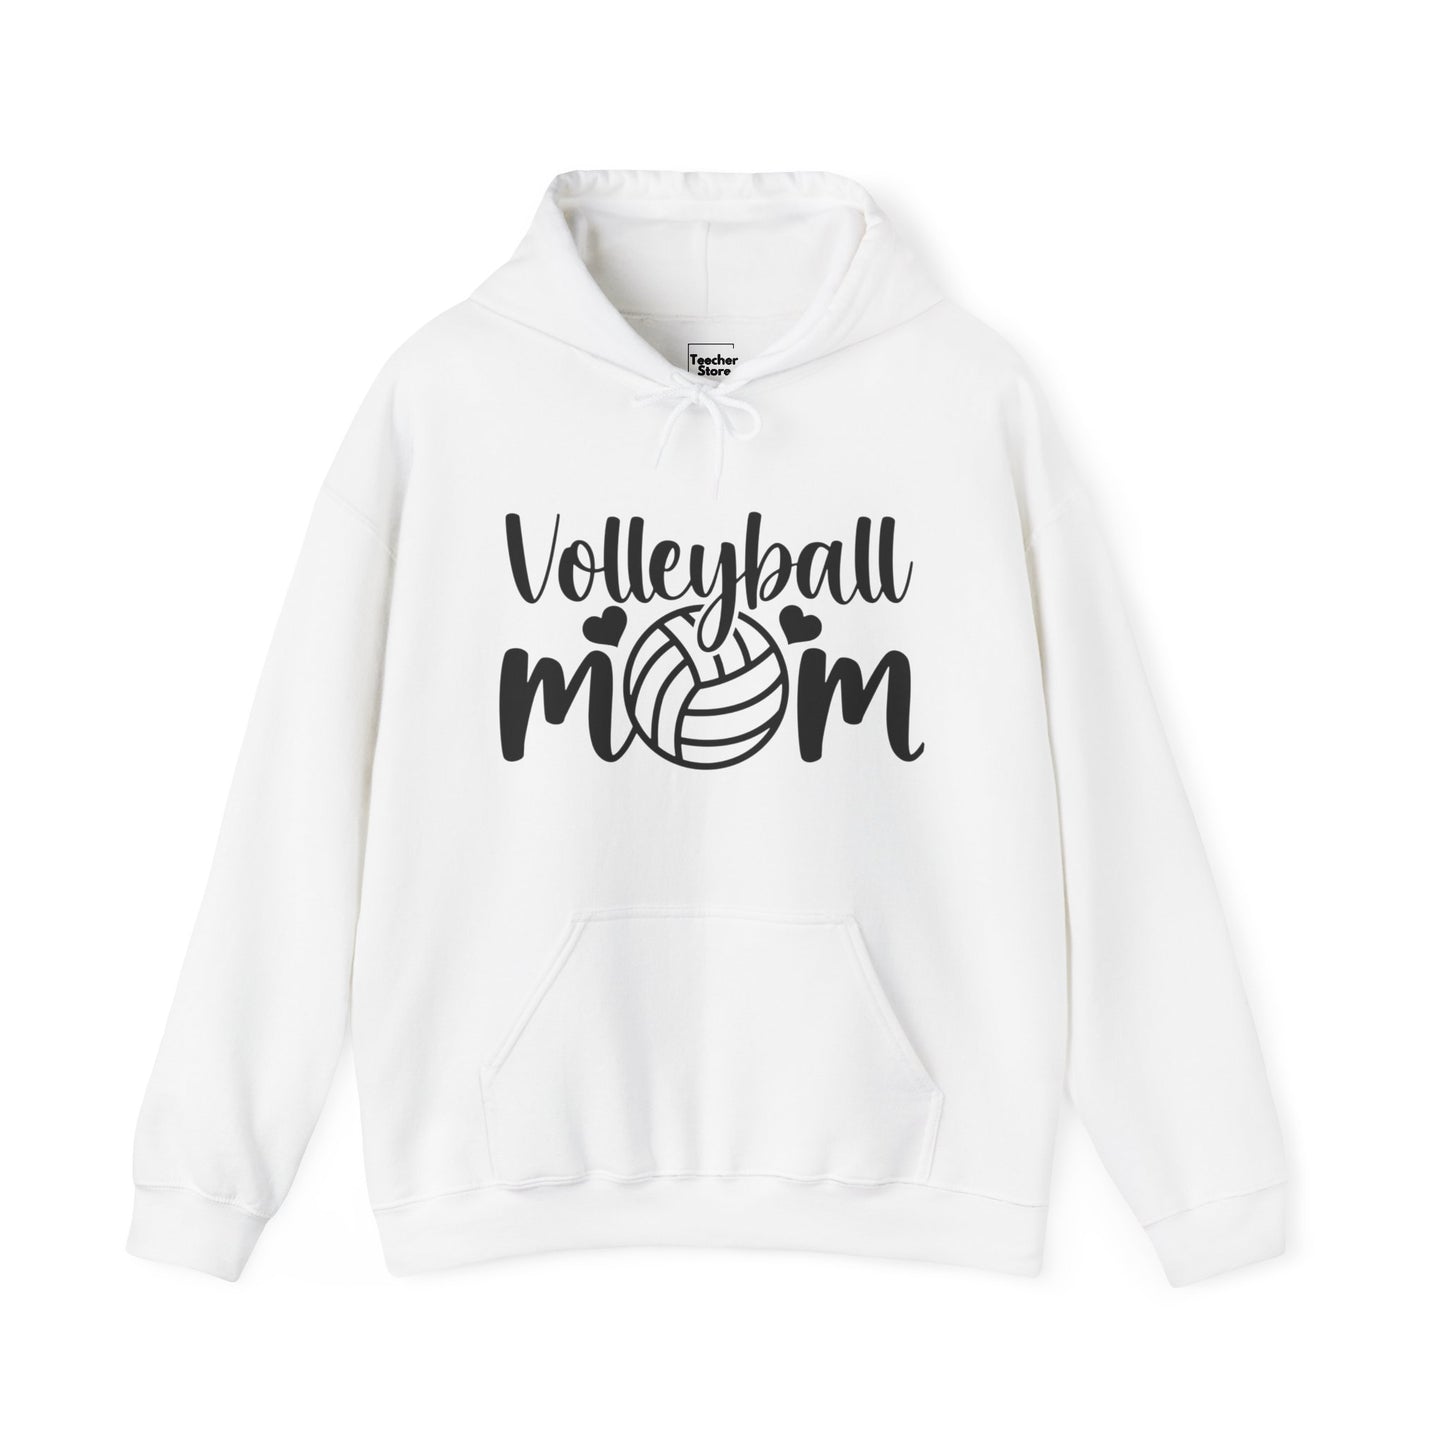 Volleyball Mom Hooded Sweatshirt